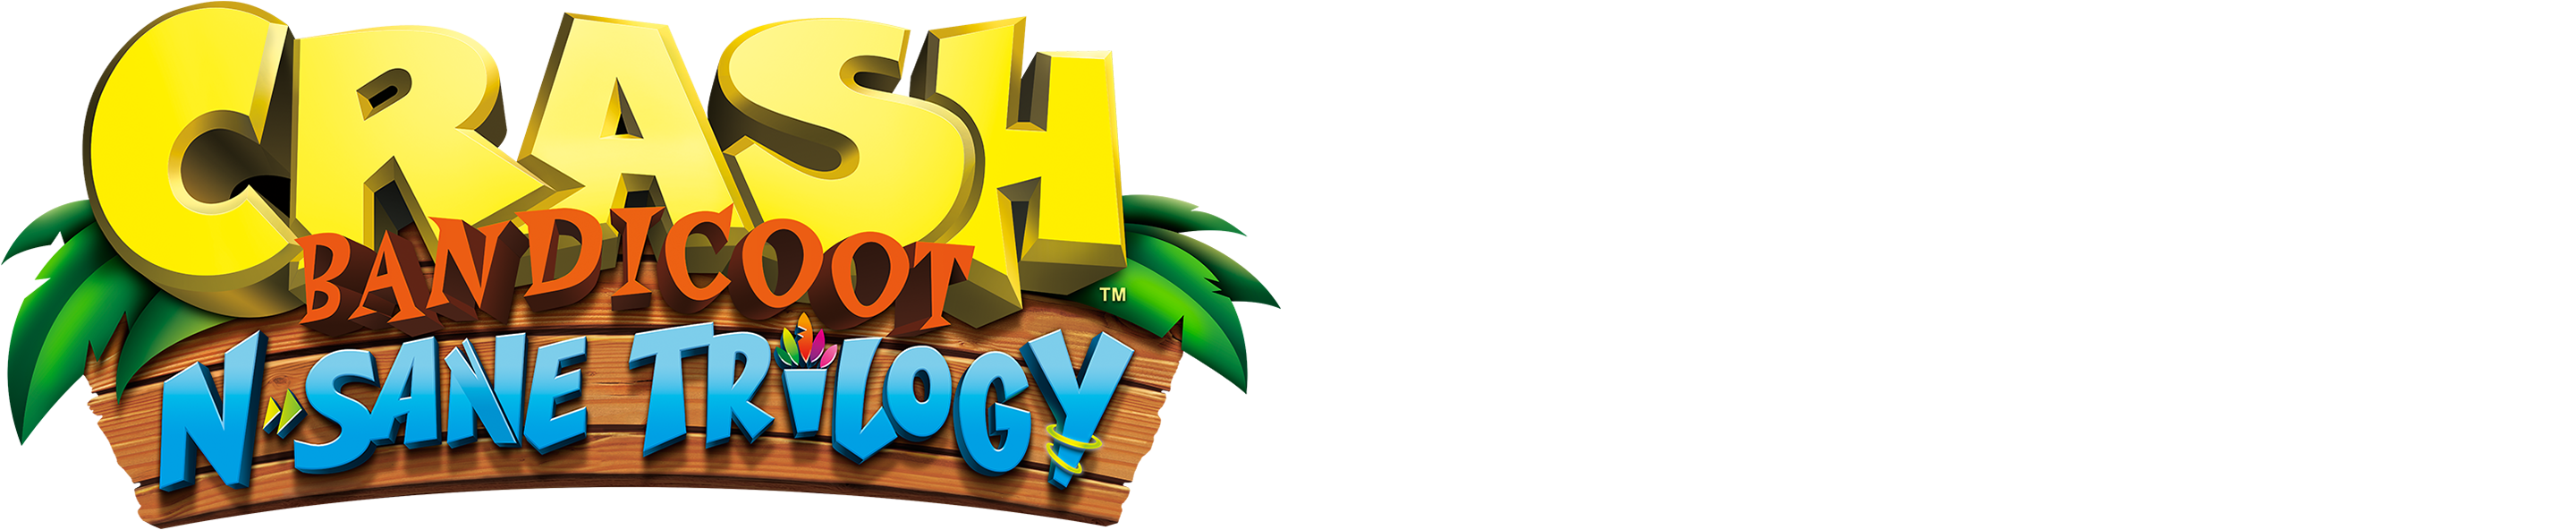 PlayStation Store (UK/Europe): Crash Bandicoot N. Sane Trilogy for  PlayStation 4 is £19.99/€21,99/$19.99 – Crashy News